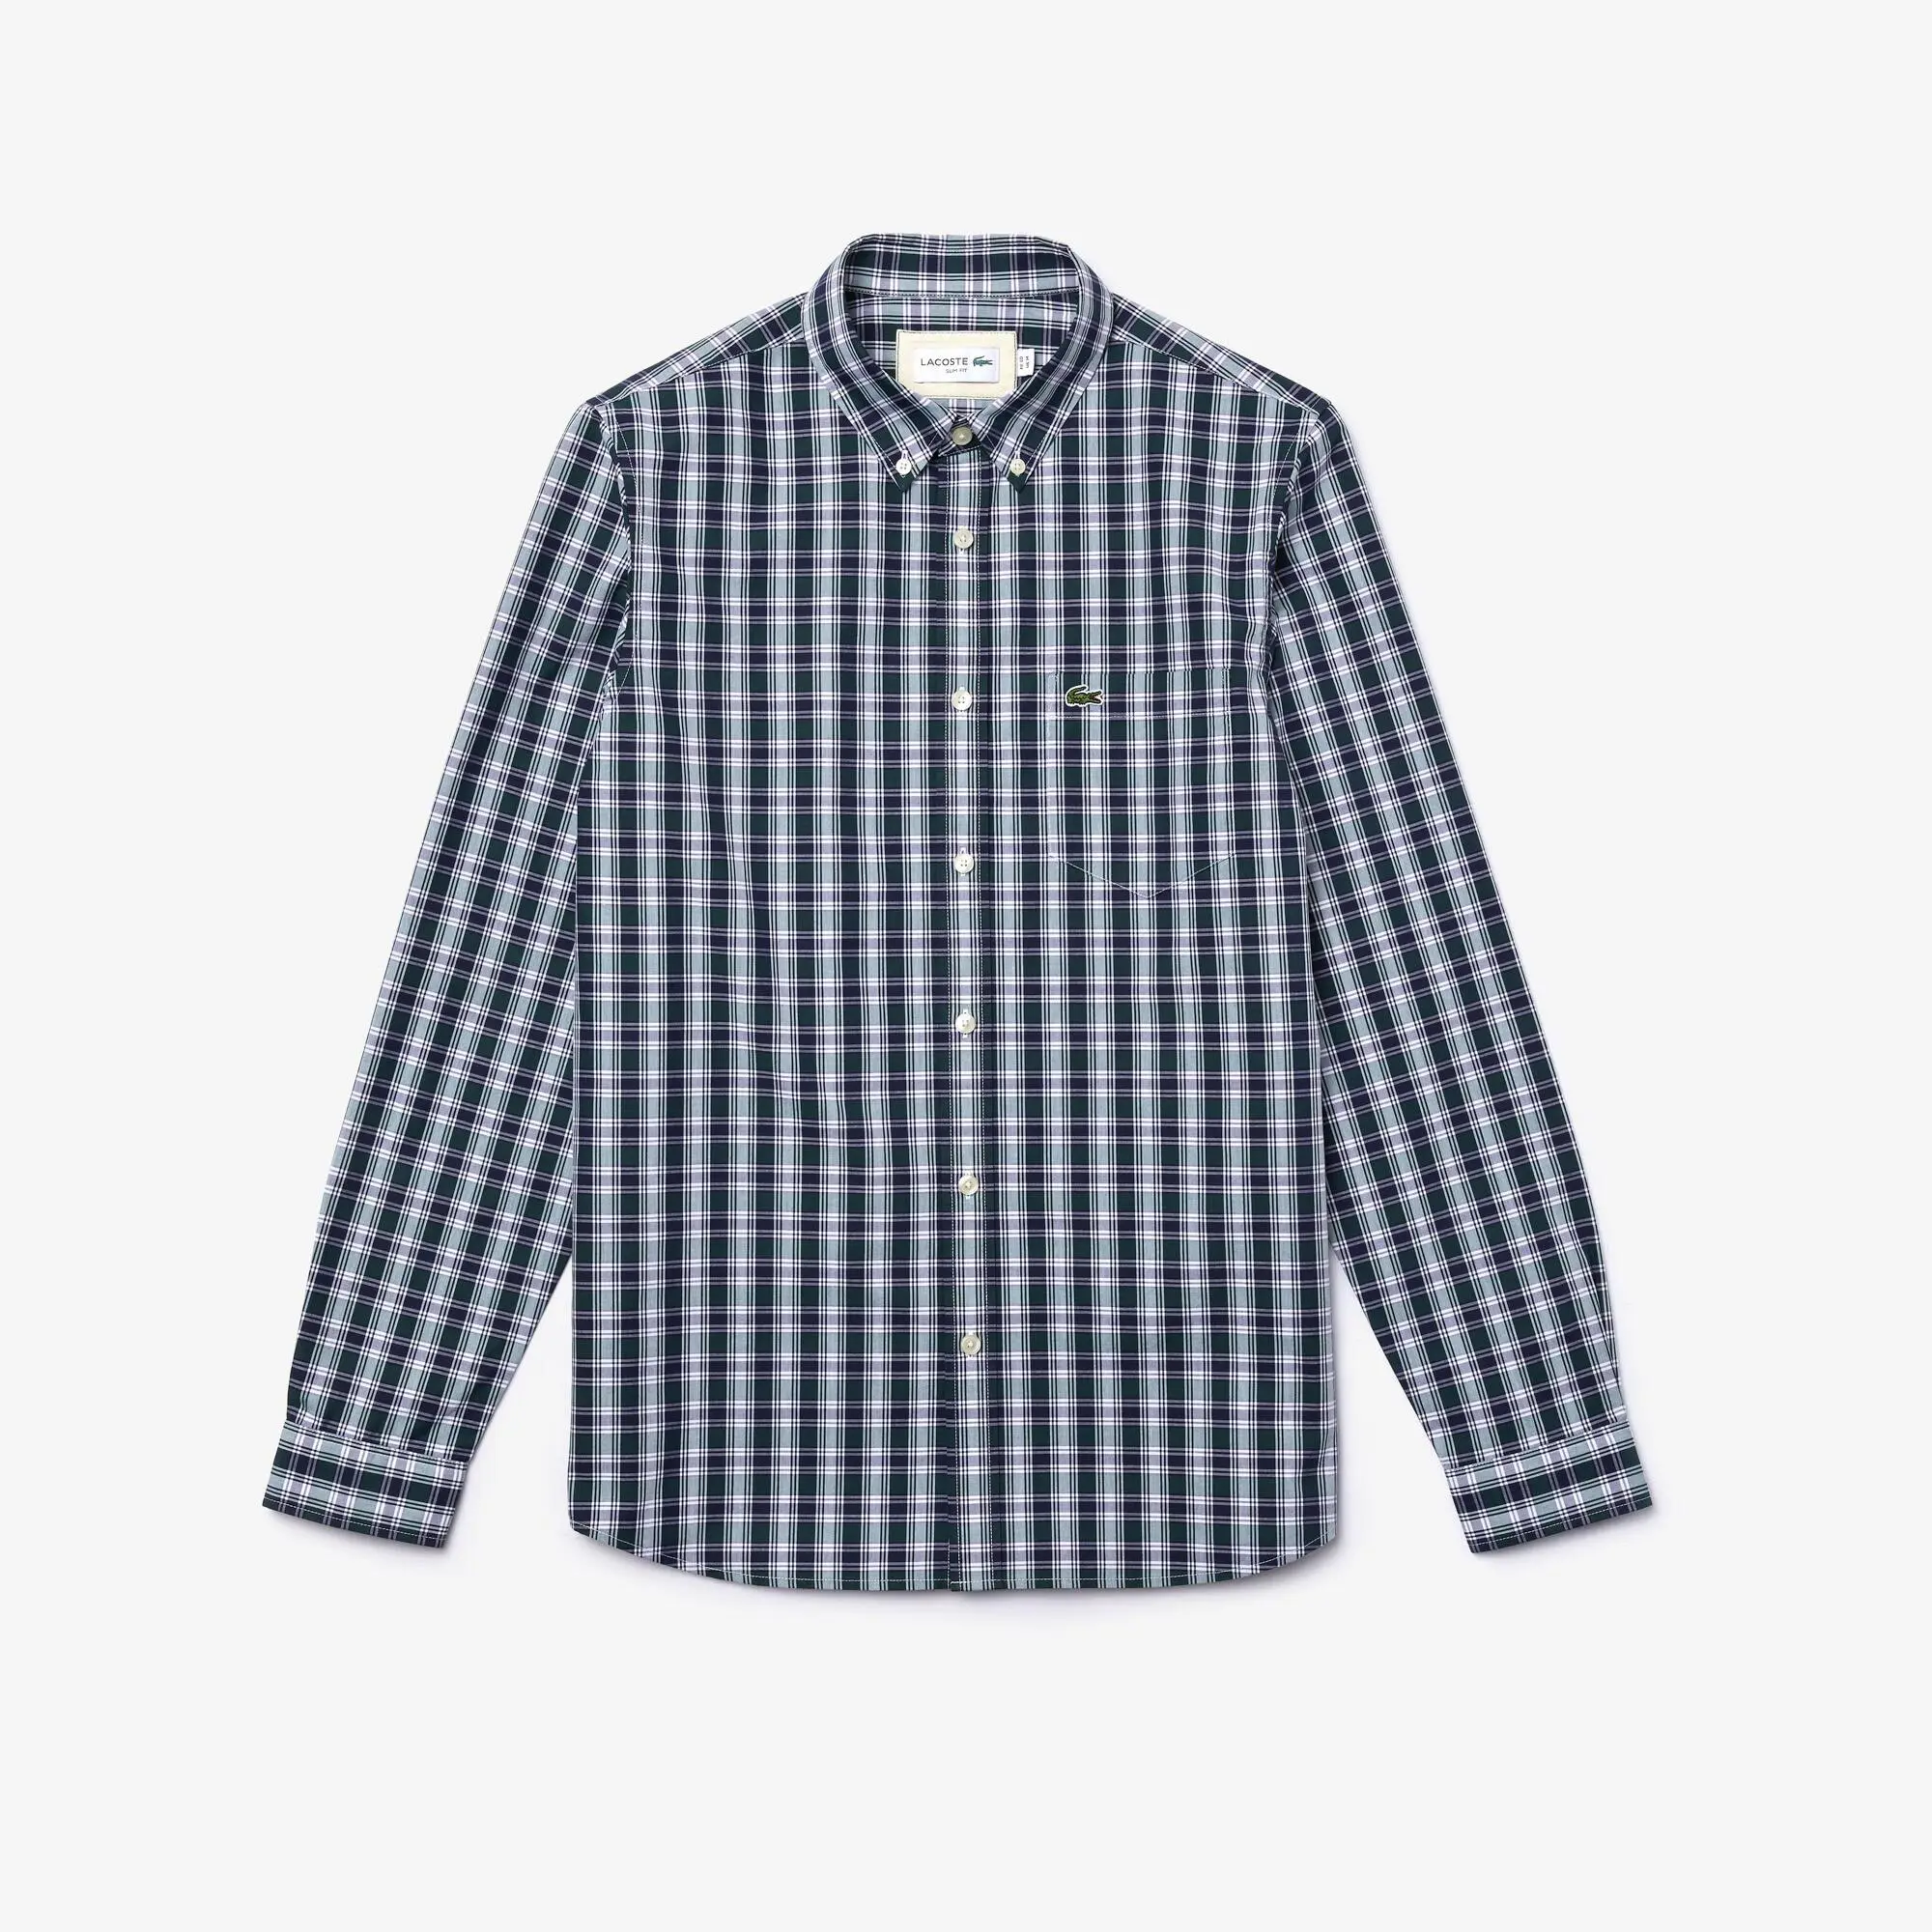 Lacoste Men's Slim Fit Checkered Cotton Poplin Shirt. 2